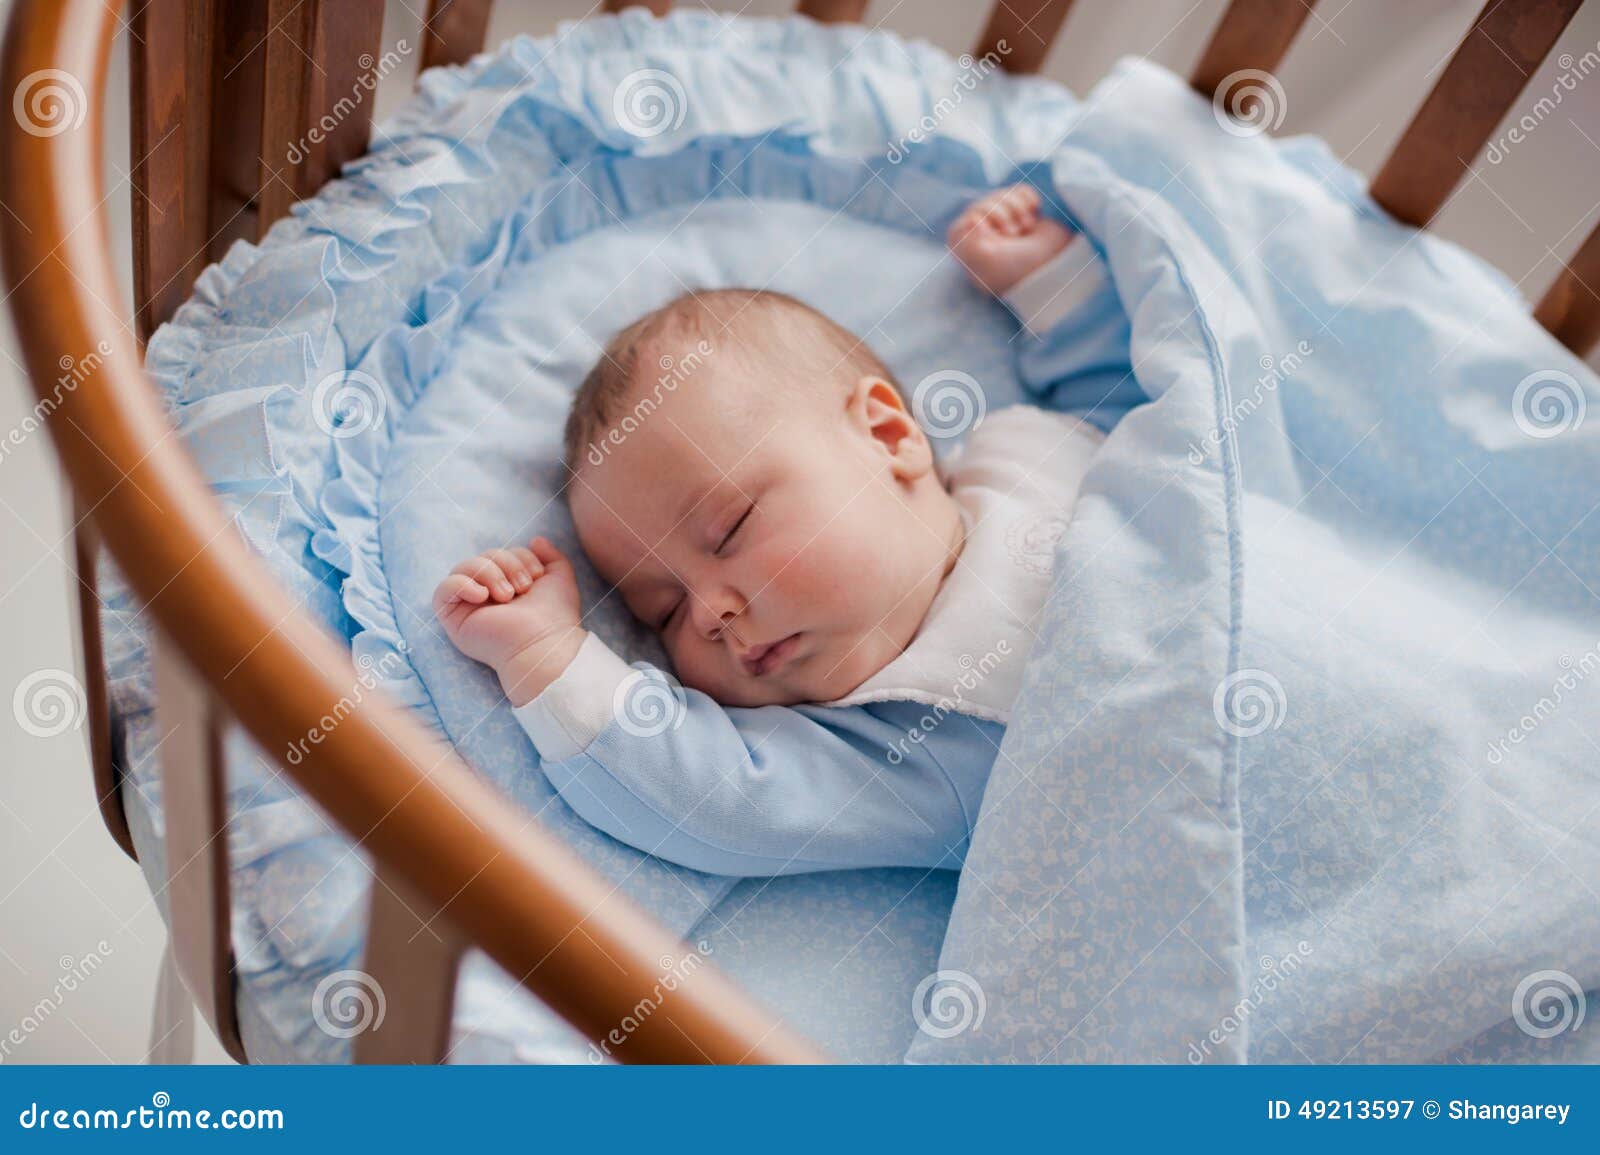 baby sleeps with a cradle